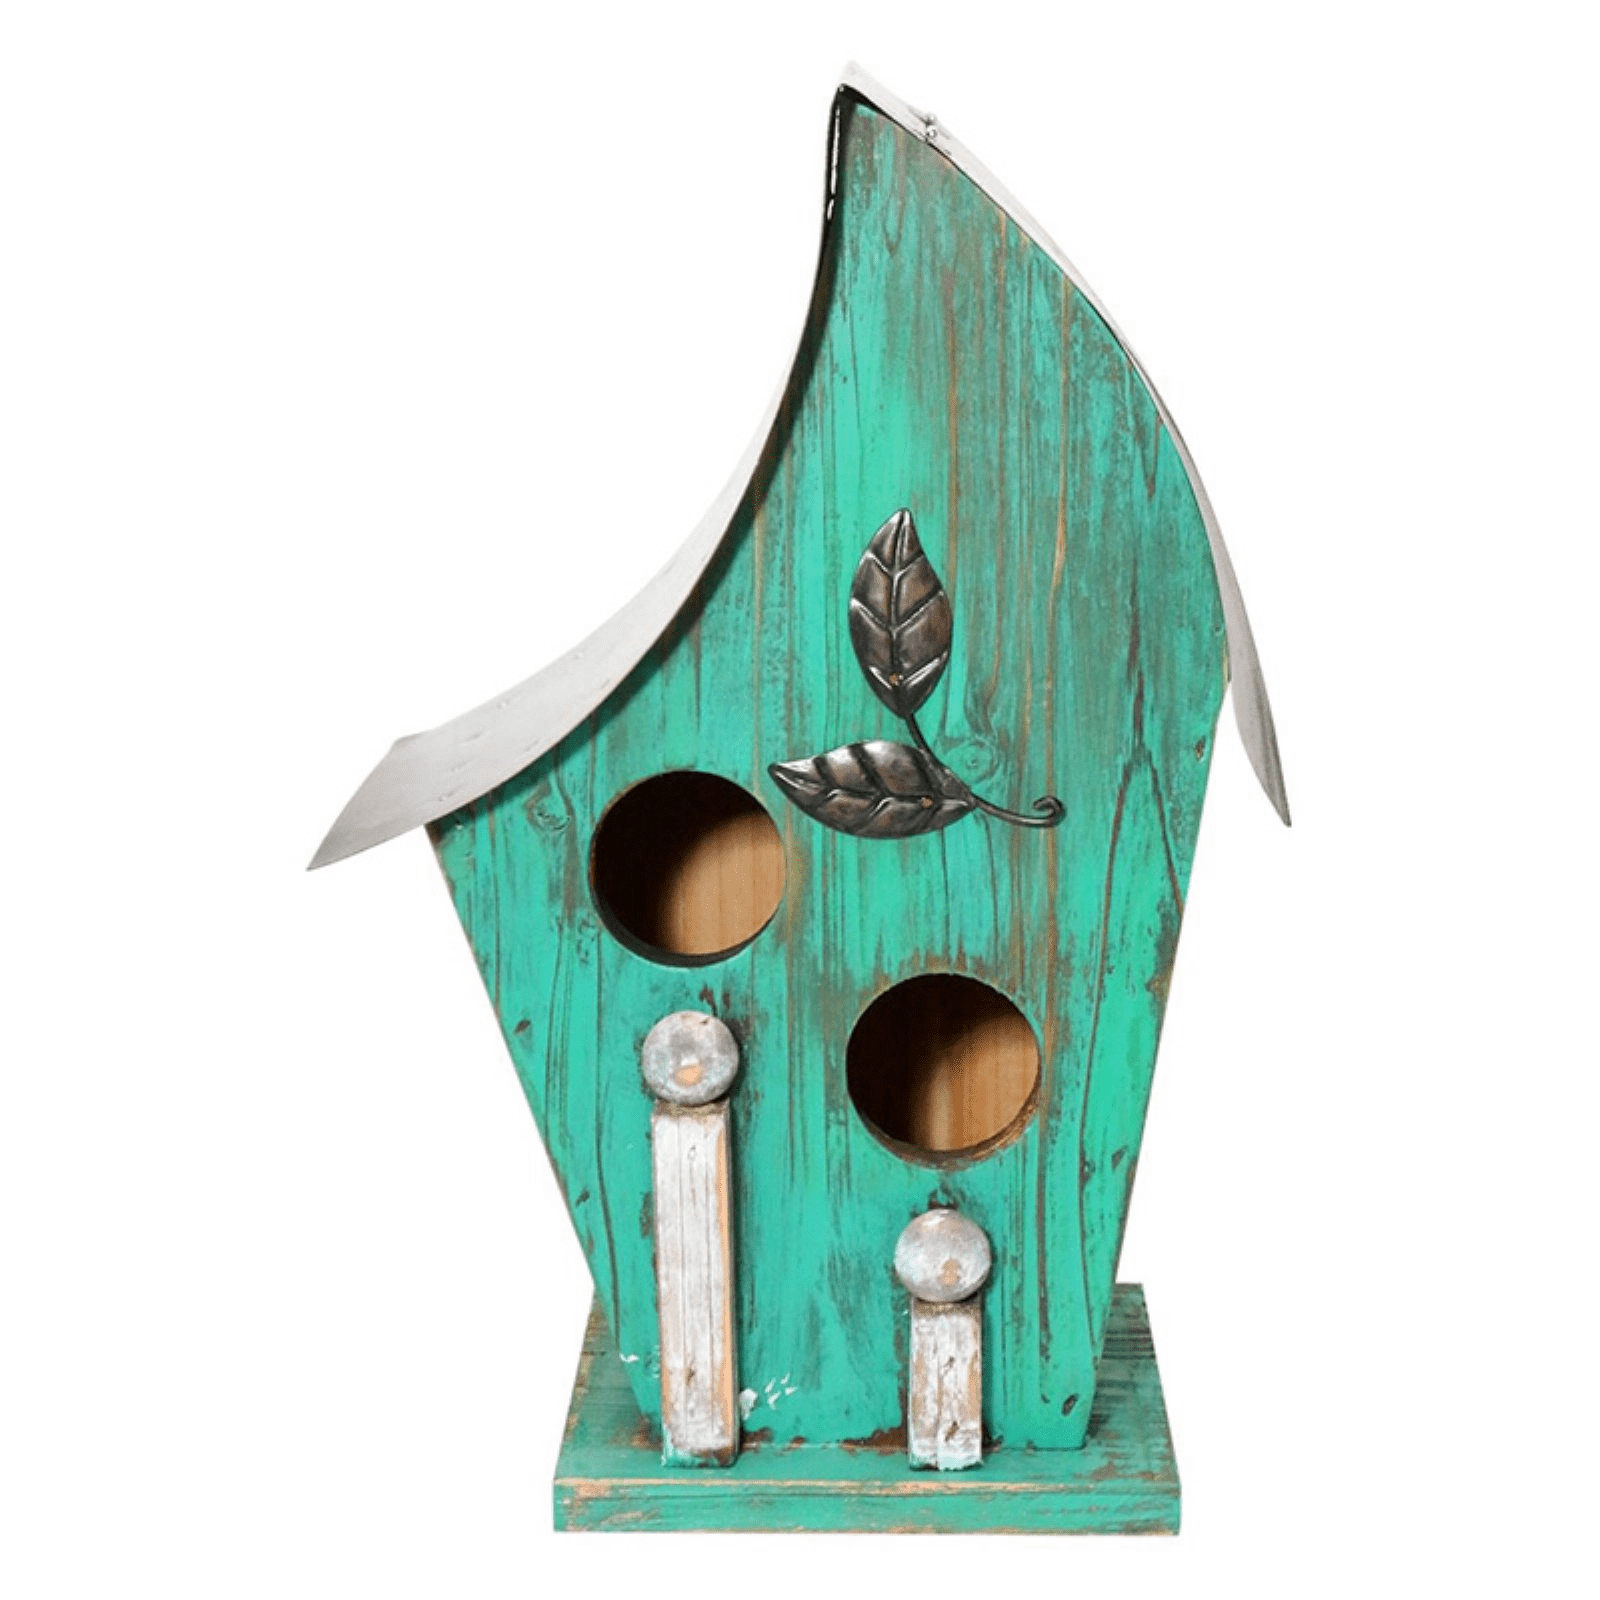 Alpine Artful Wooden Turquoise Birdhouse